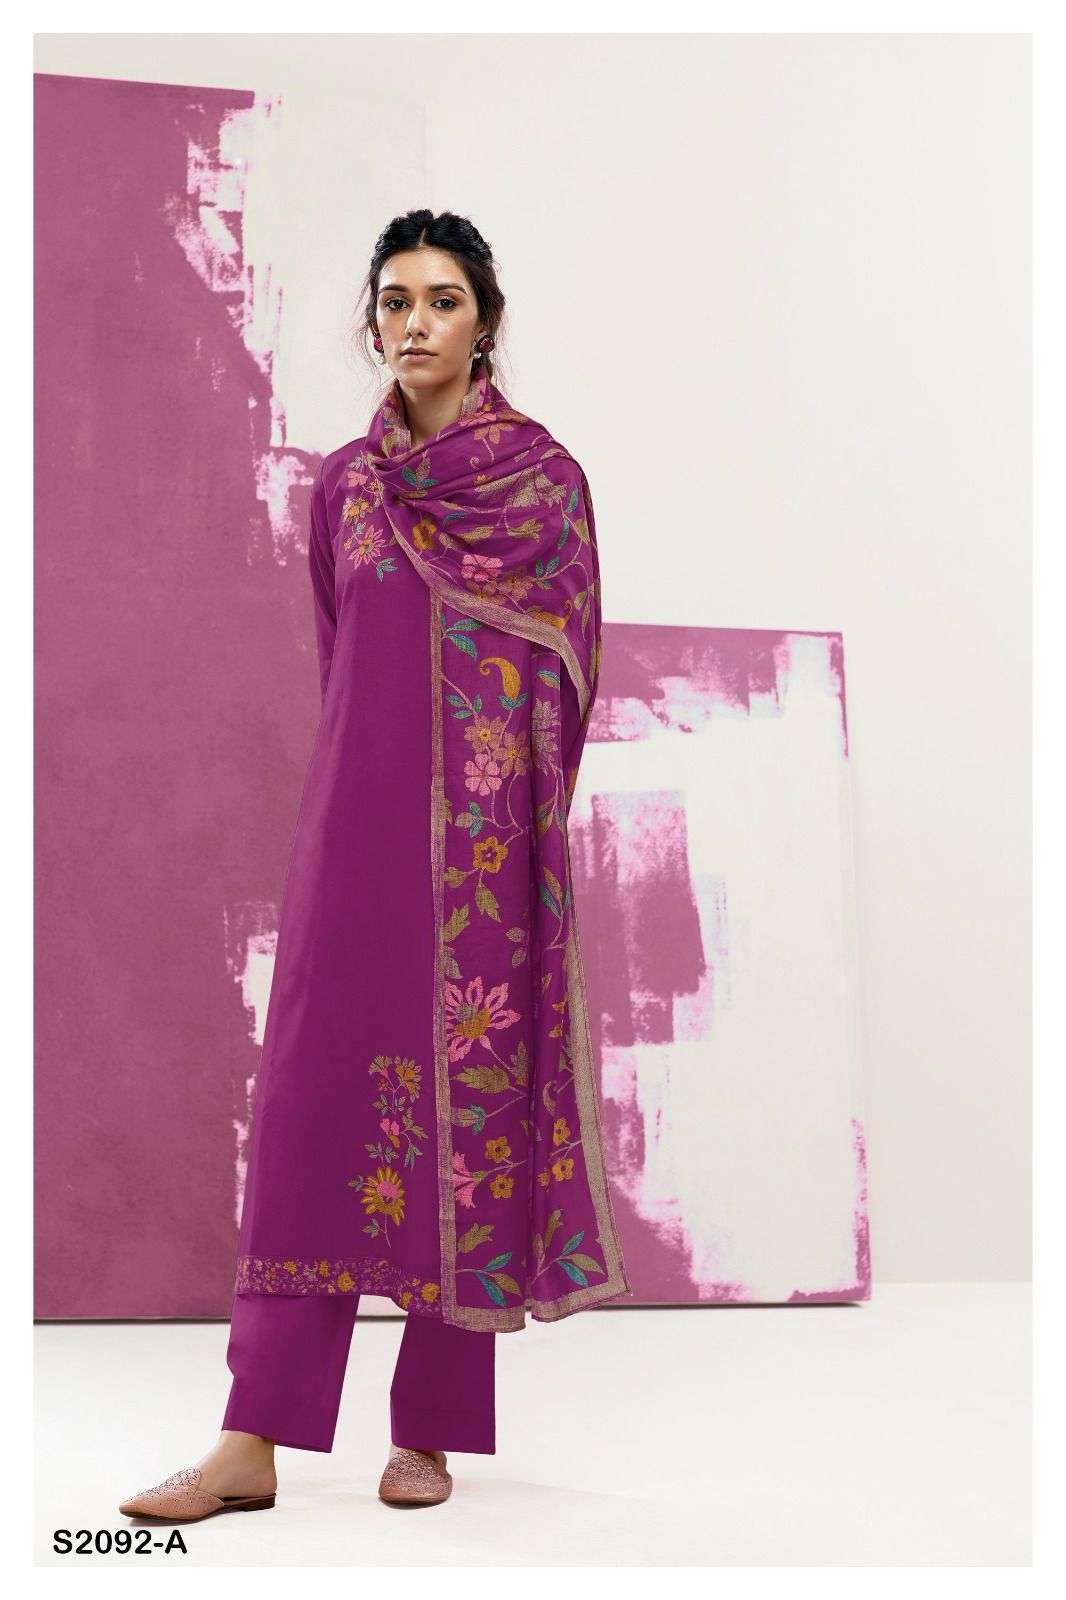 ganga odell 2092 colour series latest designer salwar kameez wholesaler surat gujarat